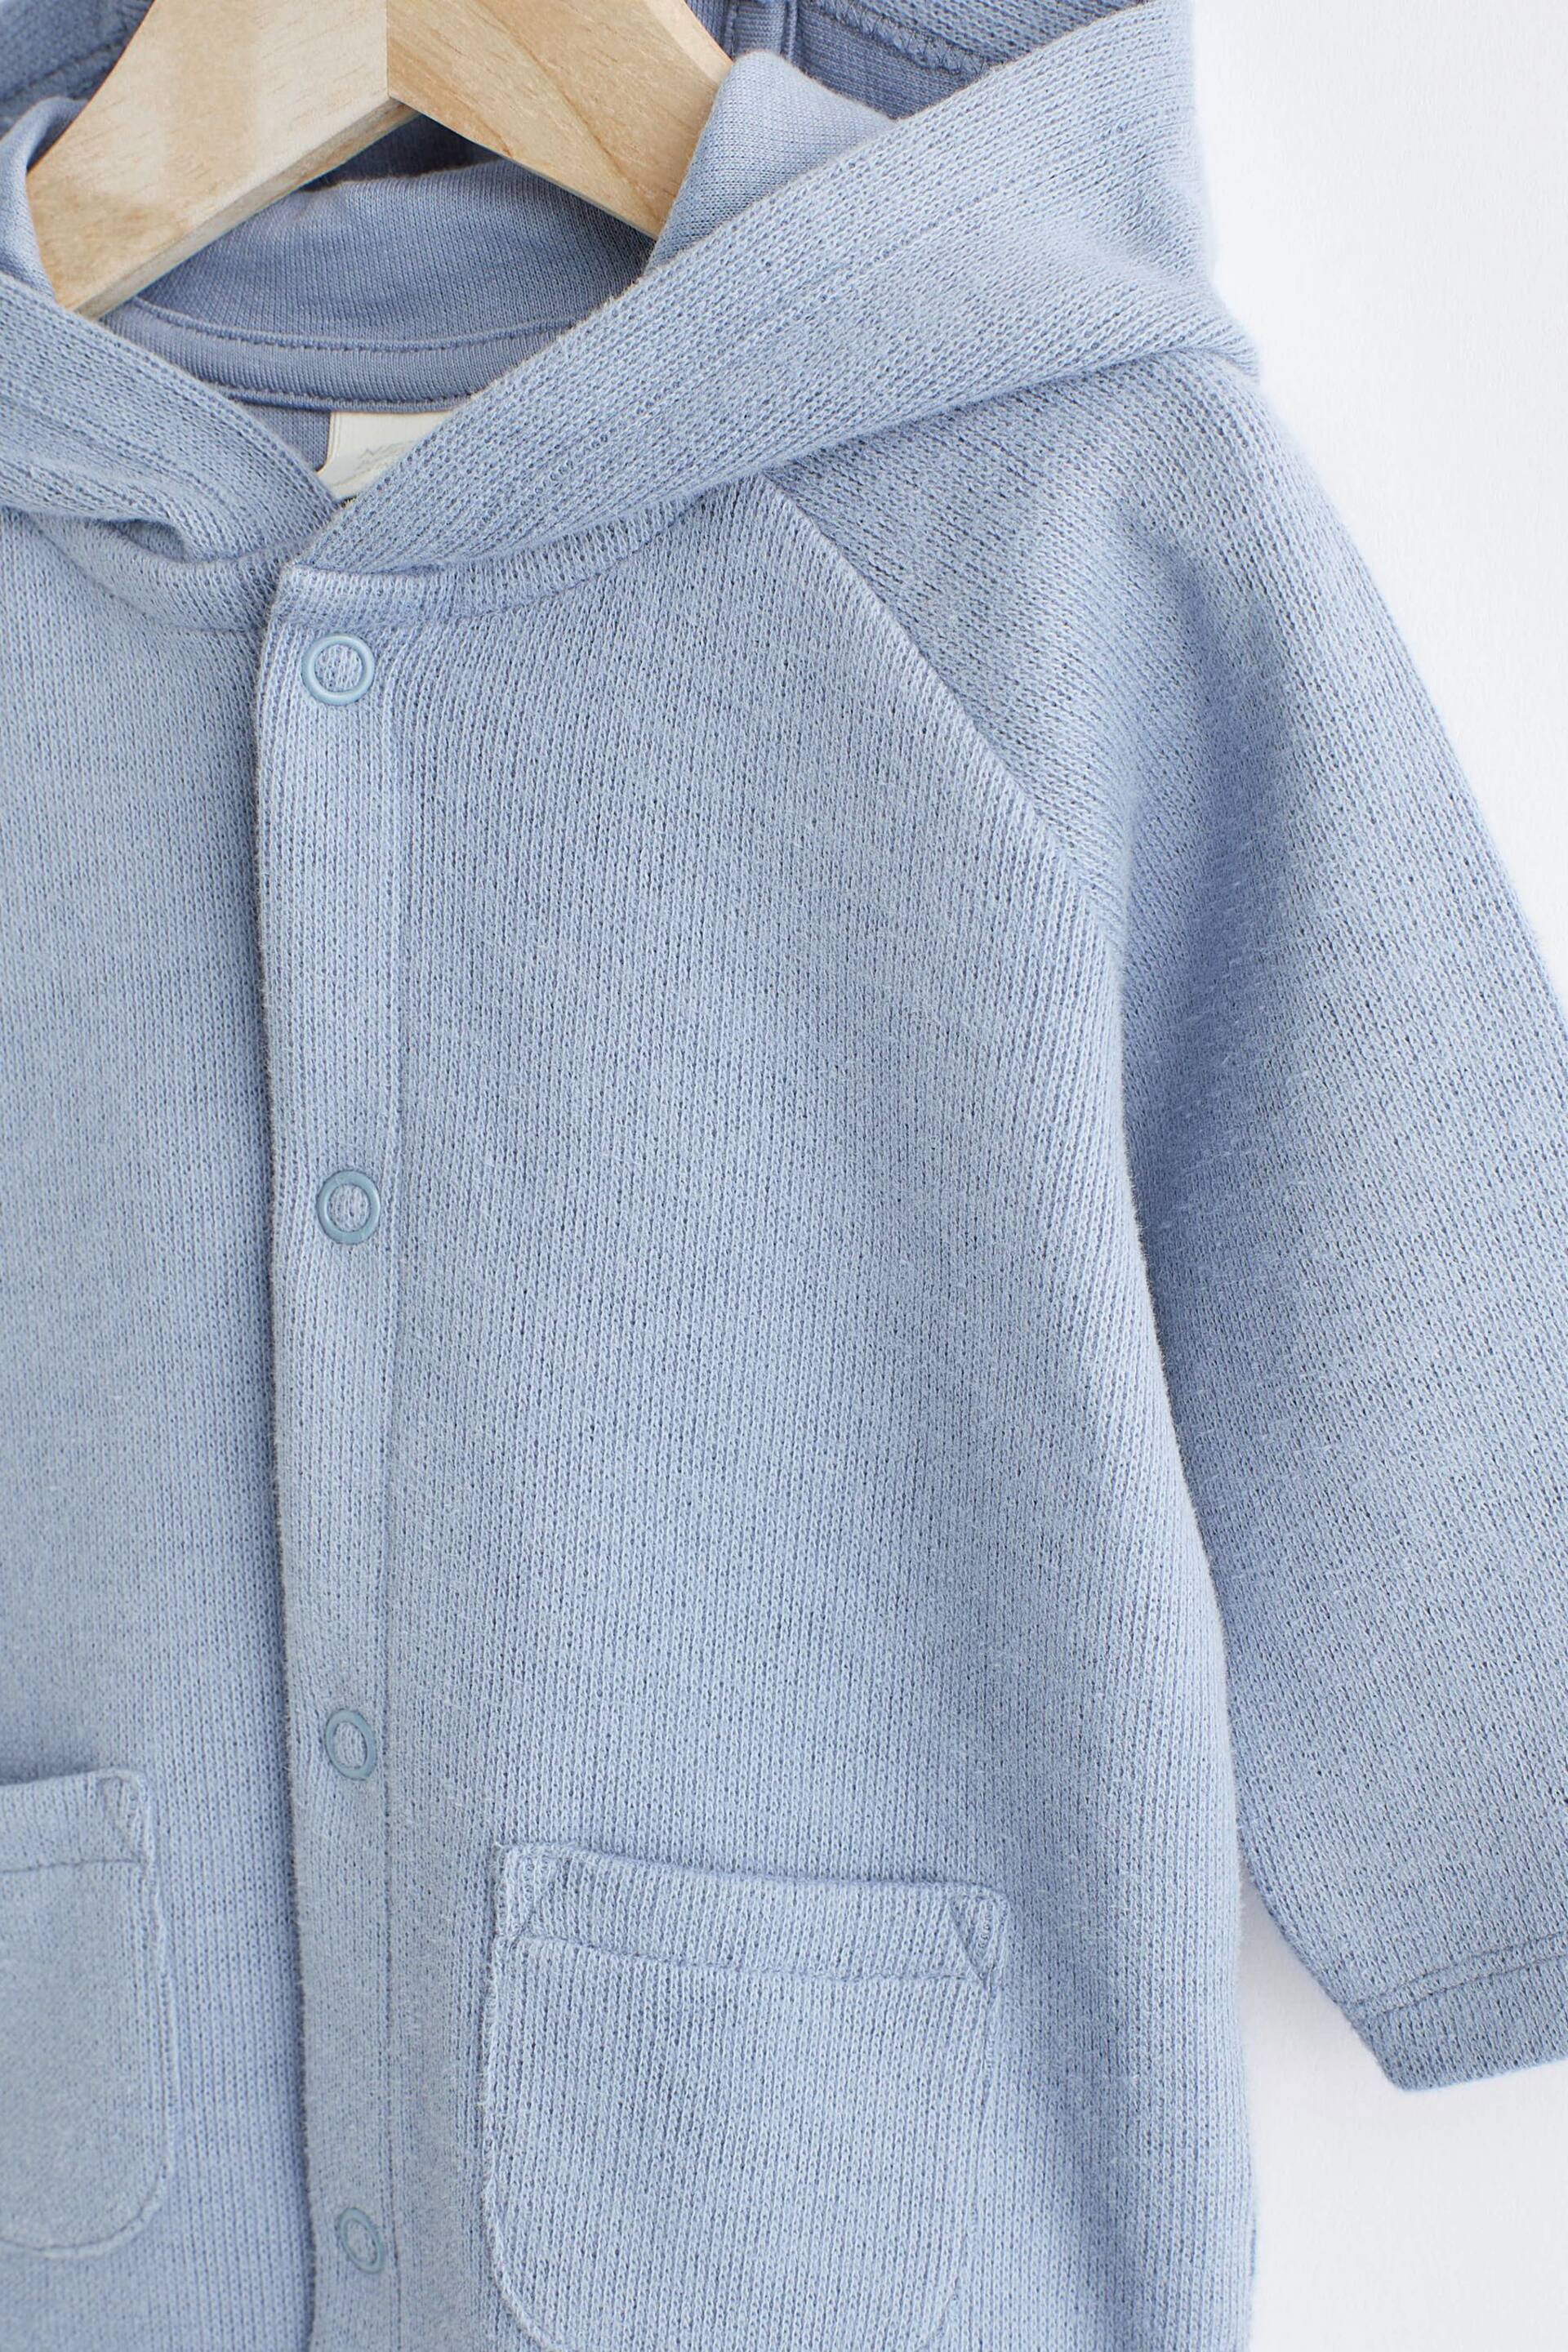 Blue Baby Soft Brushed Cotton Hooded Jacket (0mths-3yrs) - Image 4 of 10